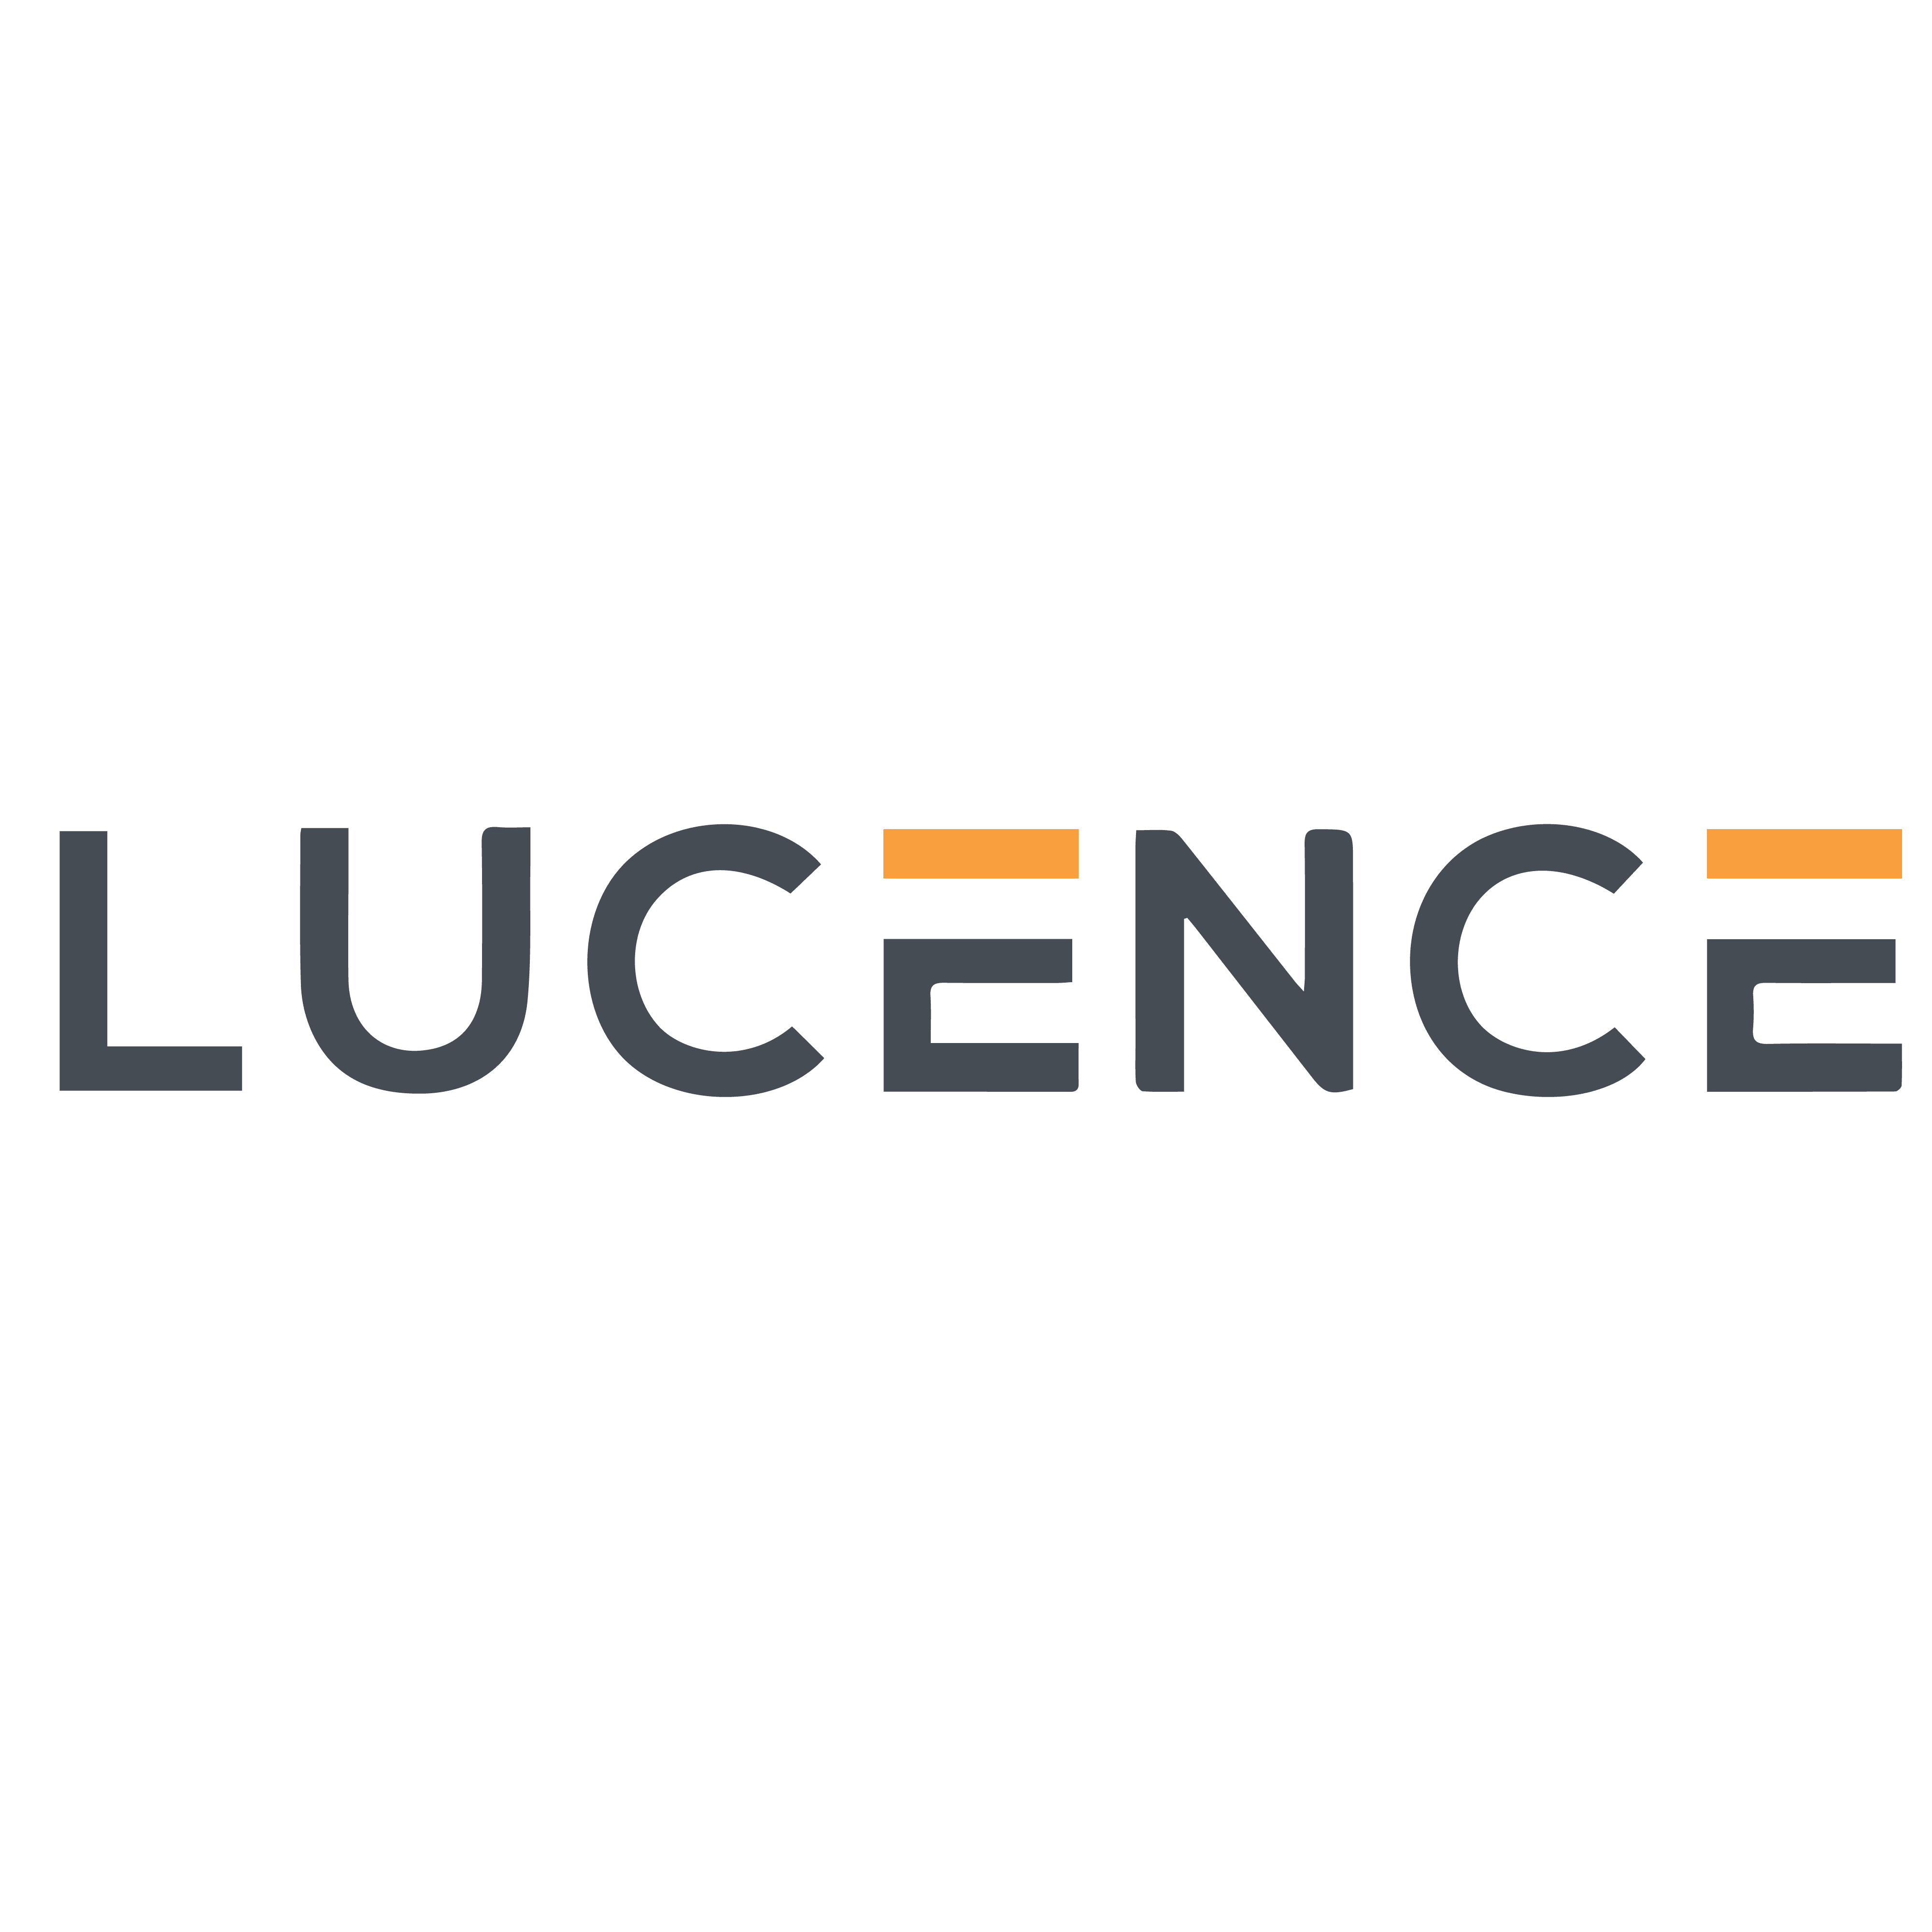 Lucence-05